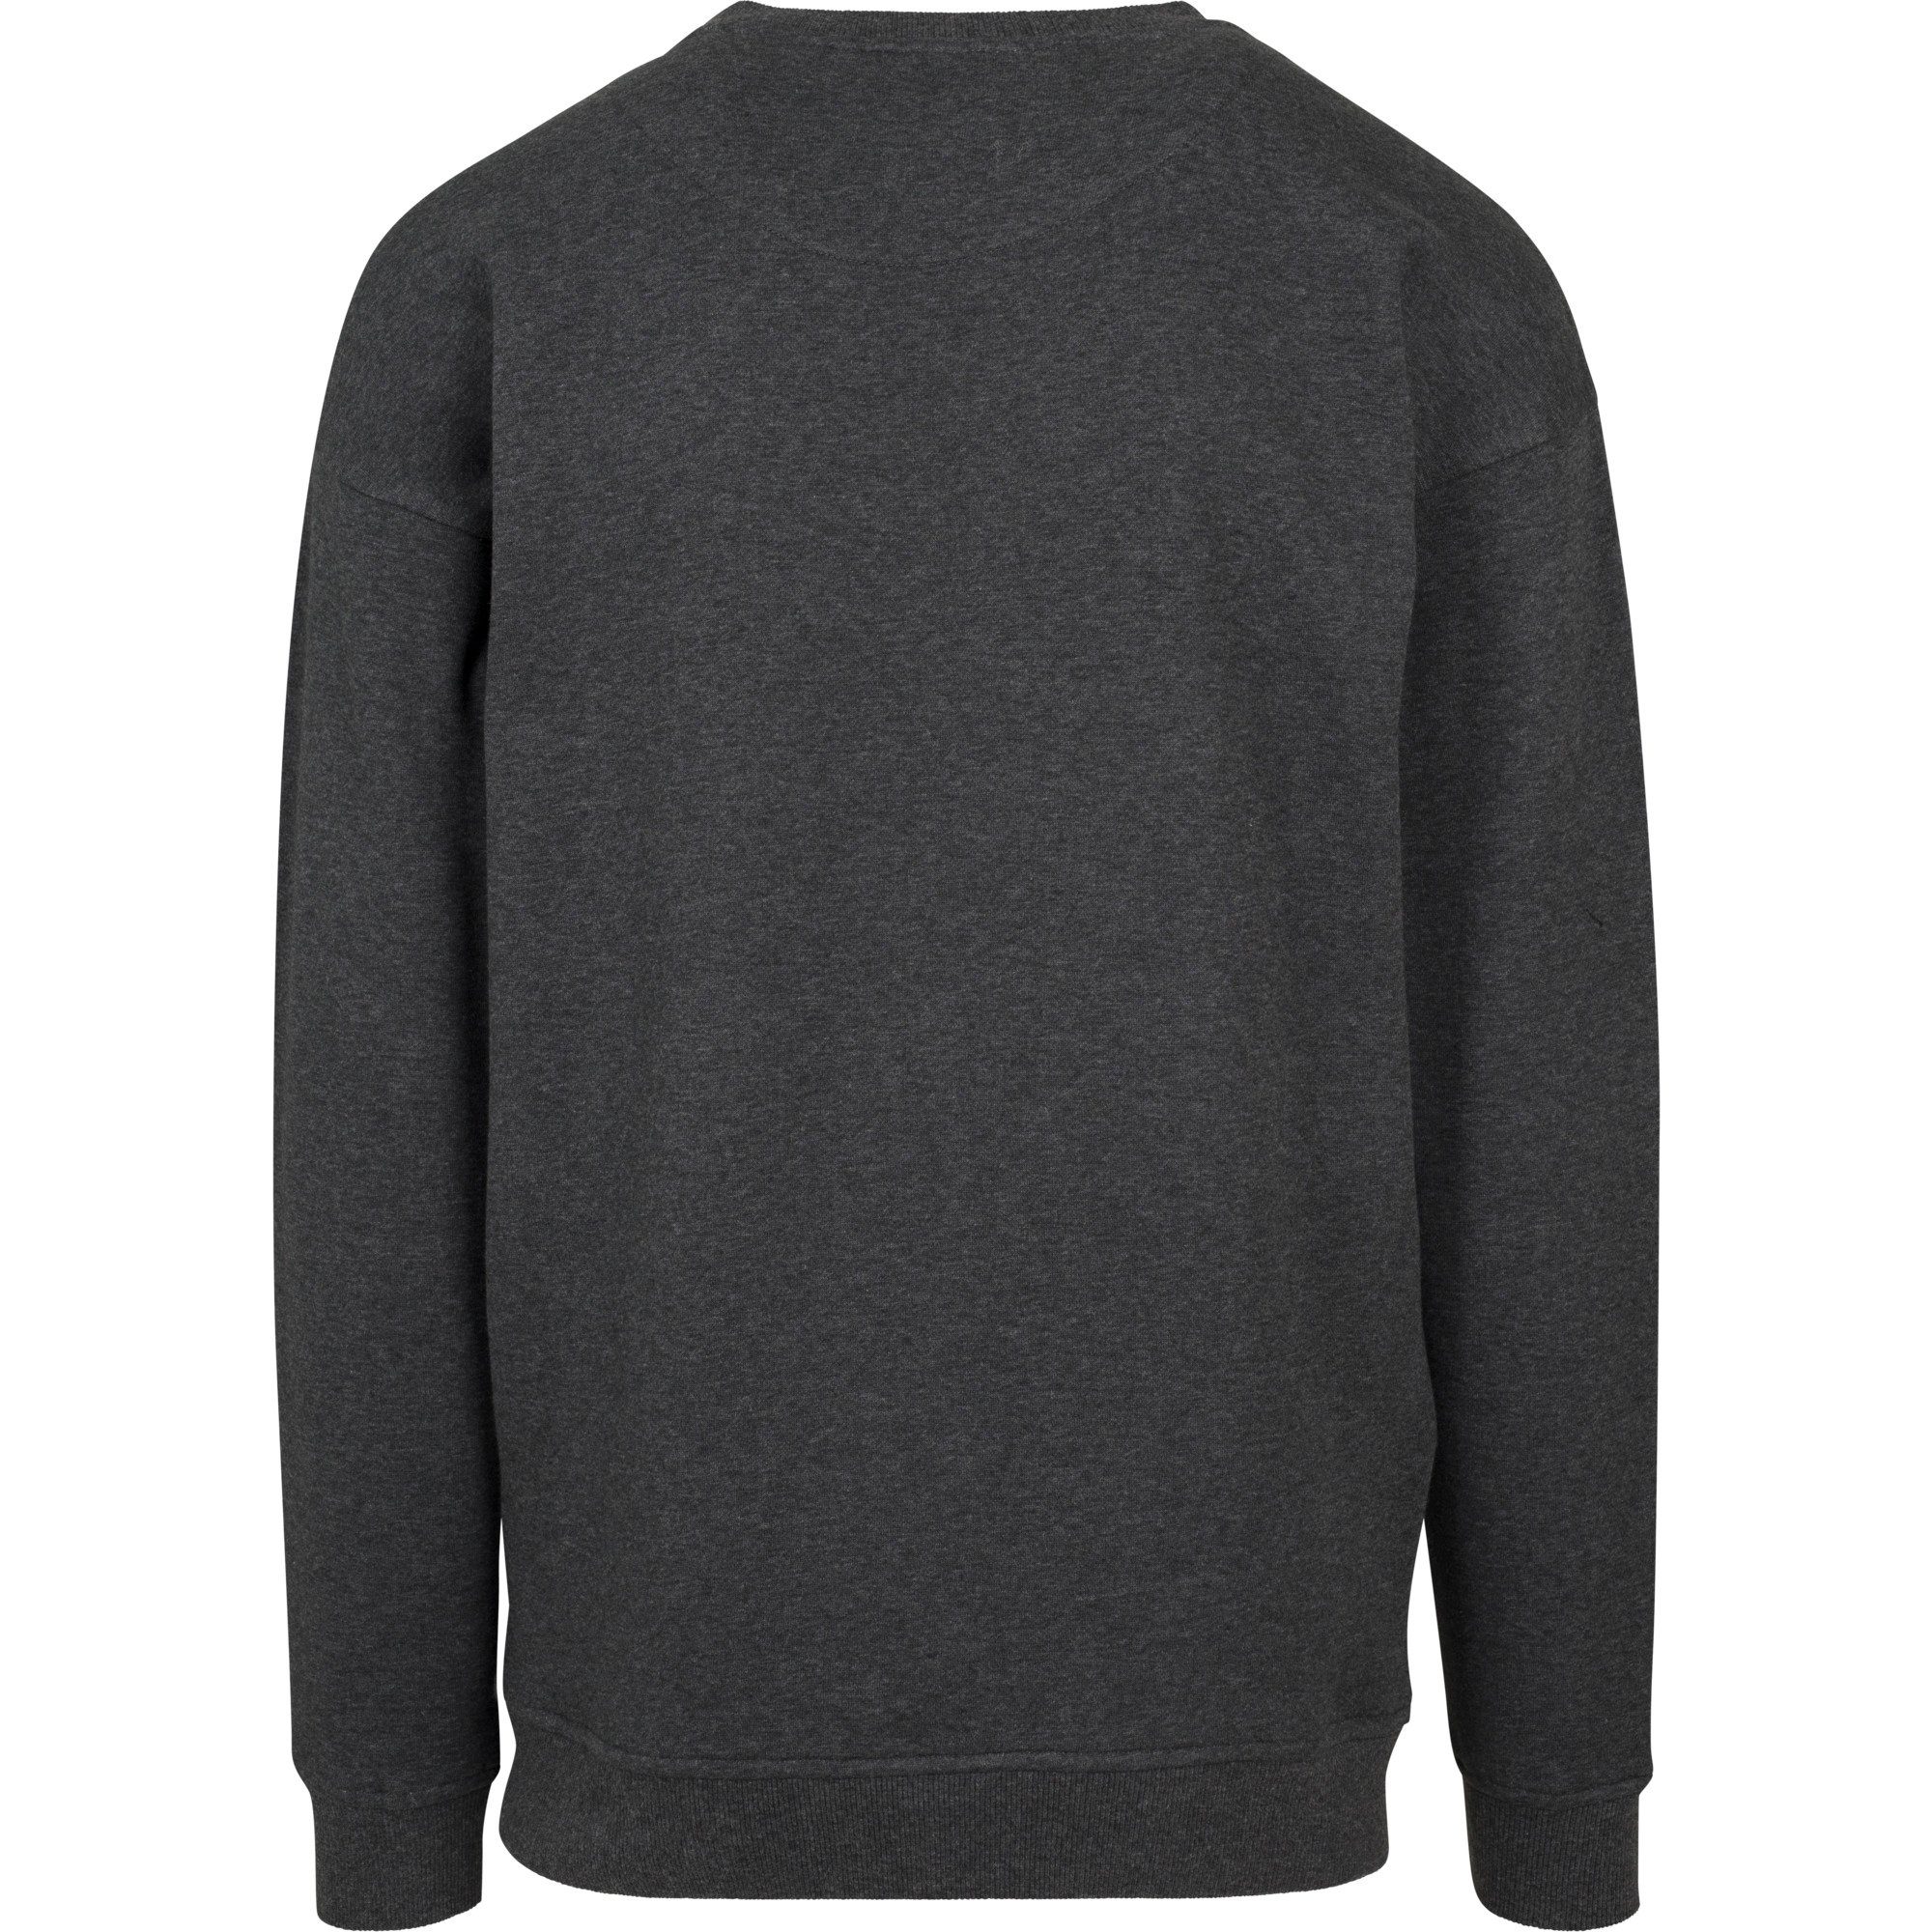 schwerer Crewneck Brand 5XL Sweatshirt Your Sweater Build schwarz Pullover S Herren bis